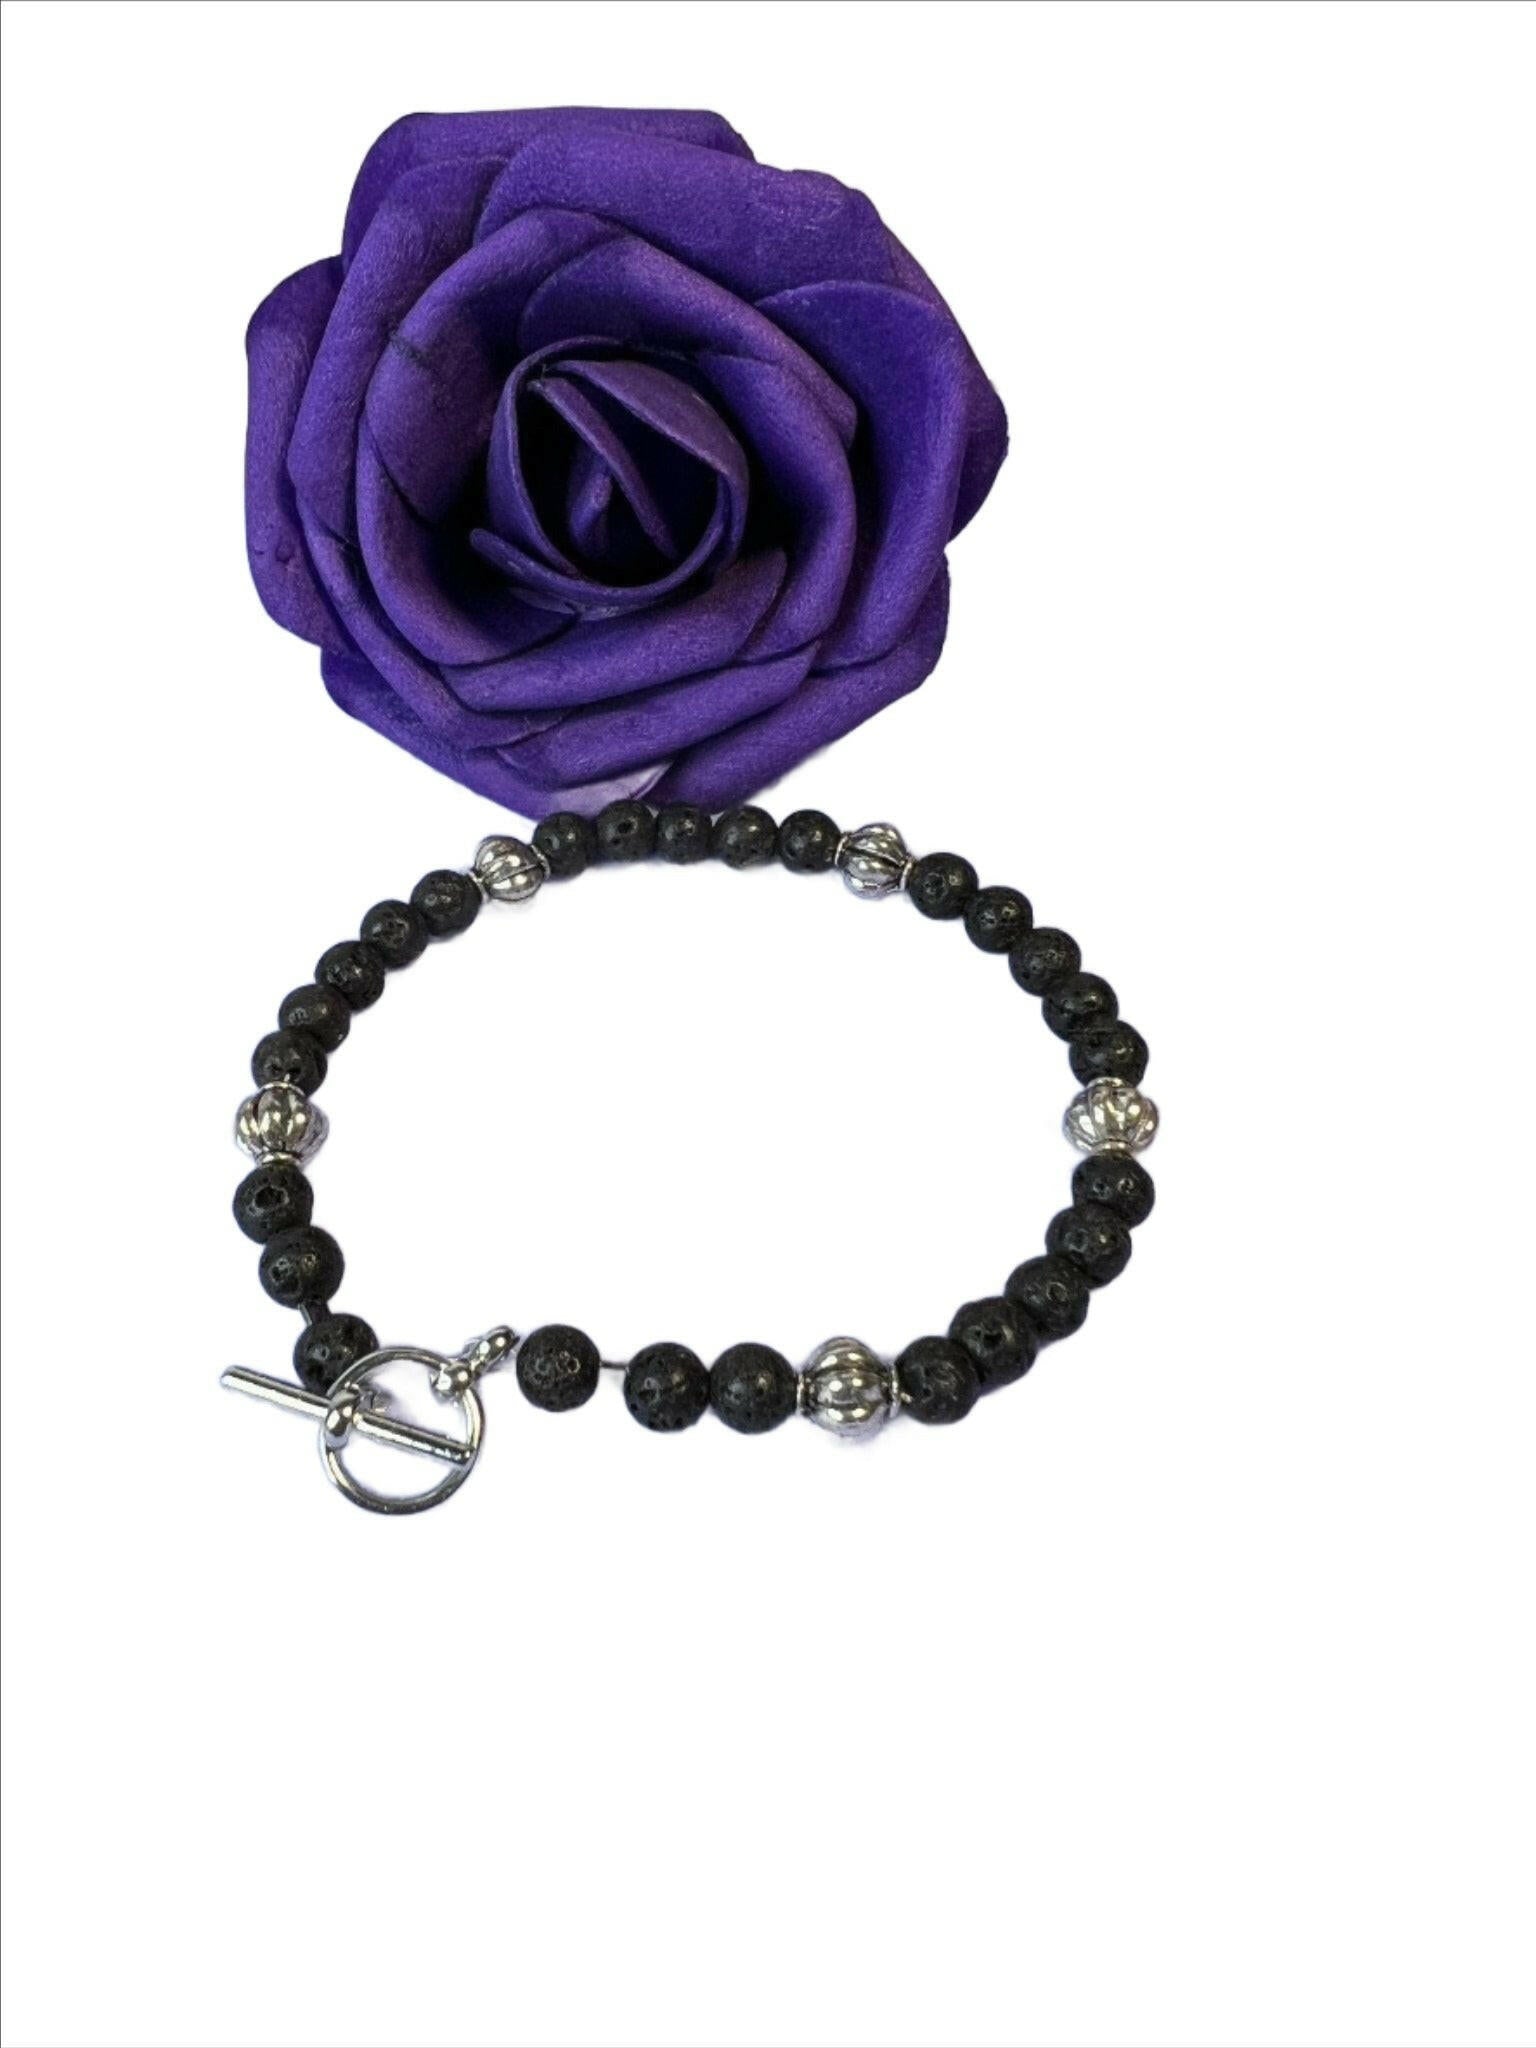 Bec Sue Jewelry Shop bracelet 6.5 / lava stone/silver spacer beads / black Black Lava Stone unisex Bracelet Tags 1031